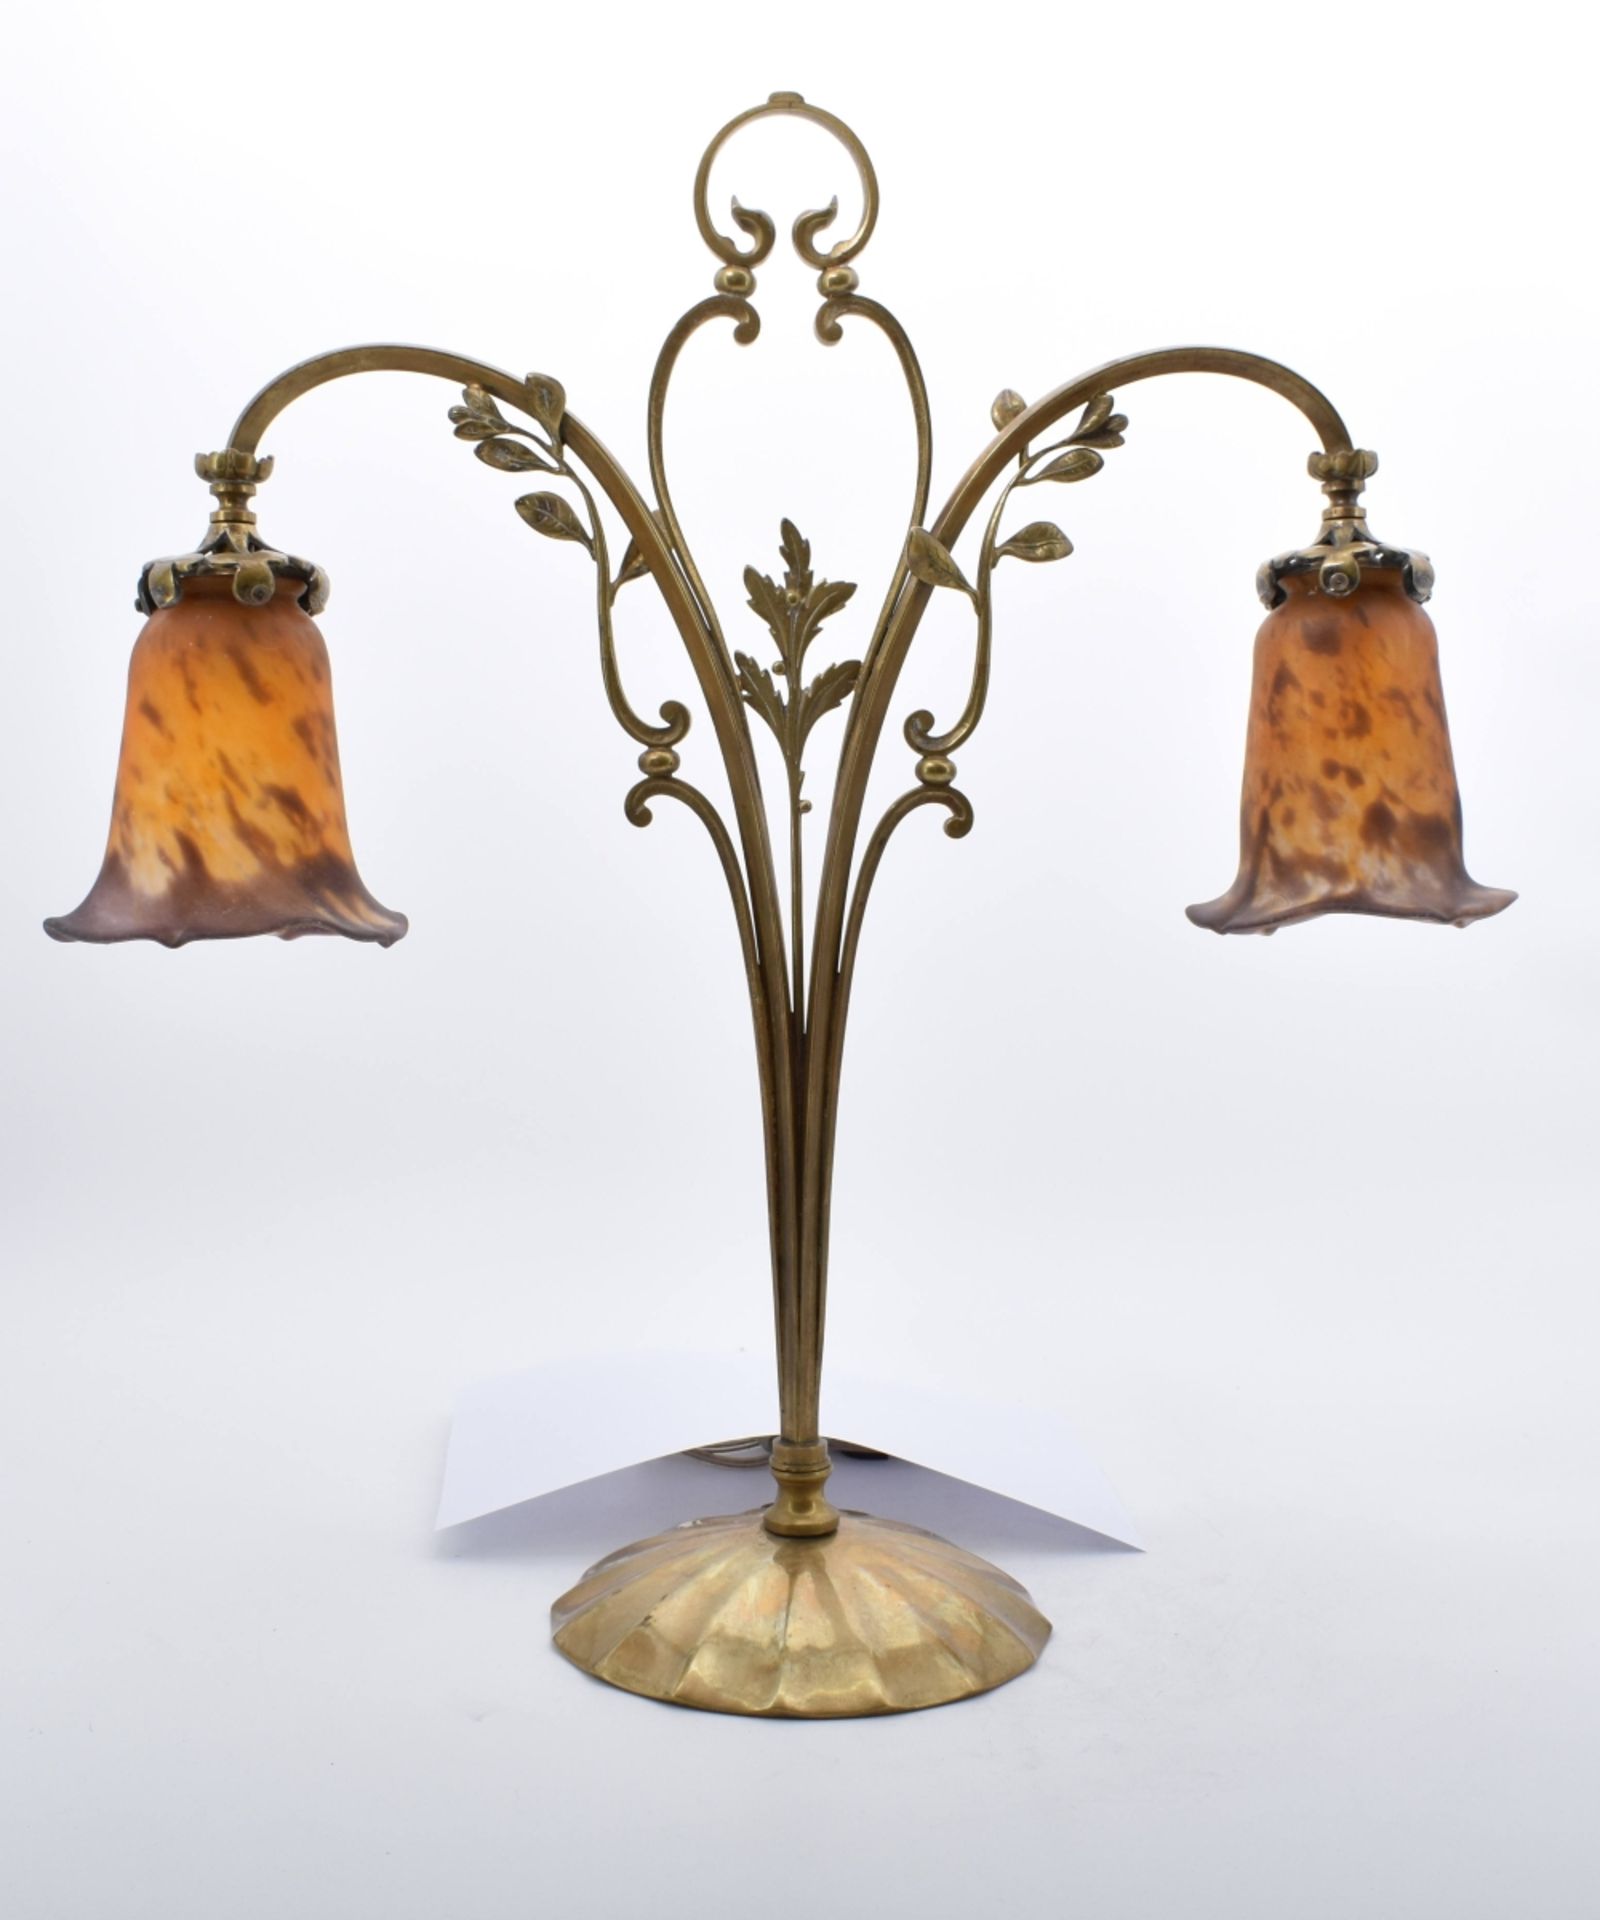 Art-Nouveau-Tischlampe, Frankreich, um 1900/05 - Image 2 of 4